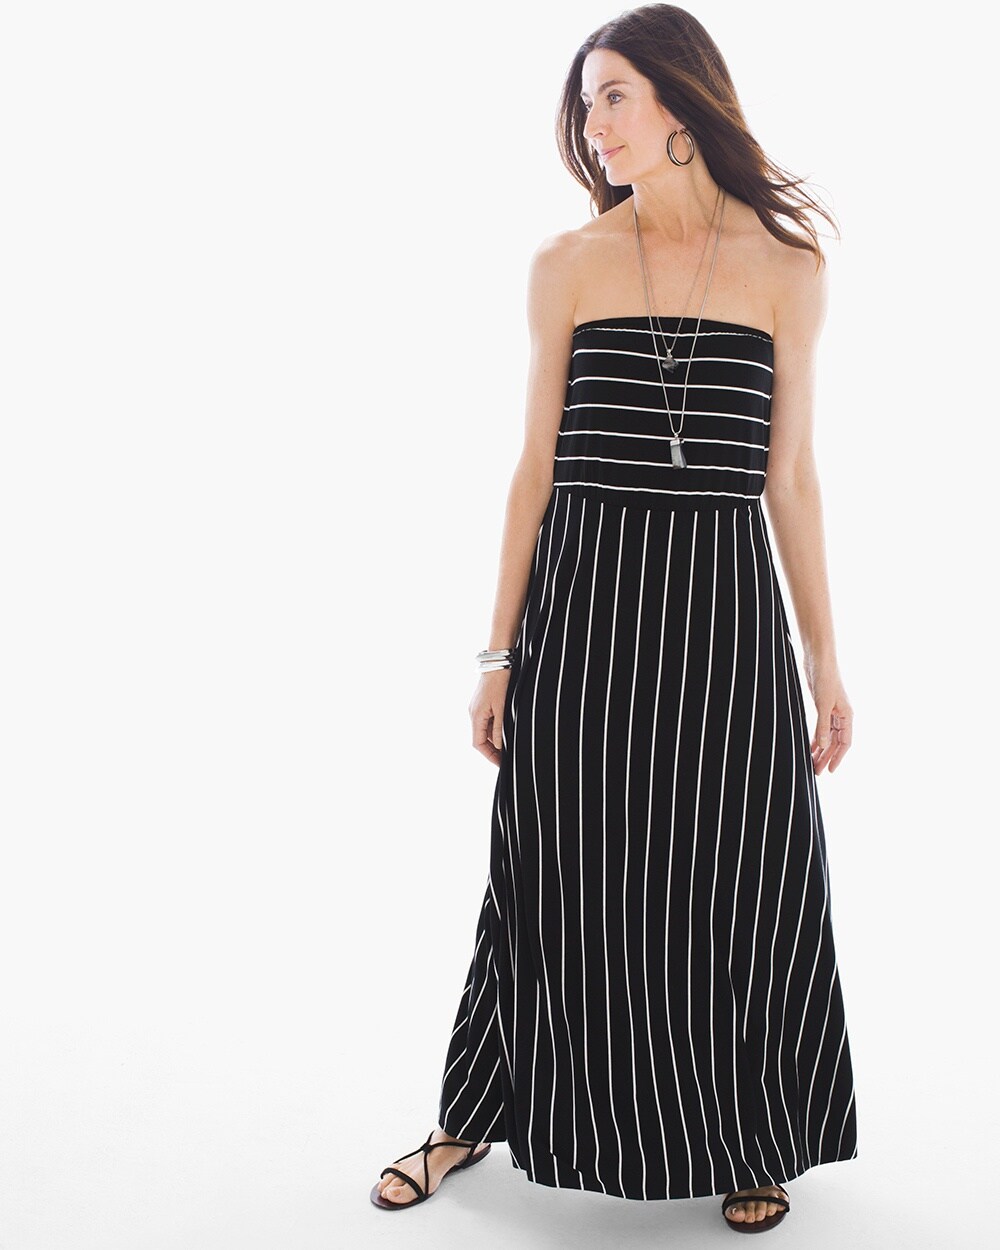 Zenergy Striped Strapless Dress